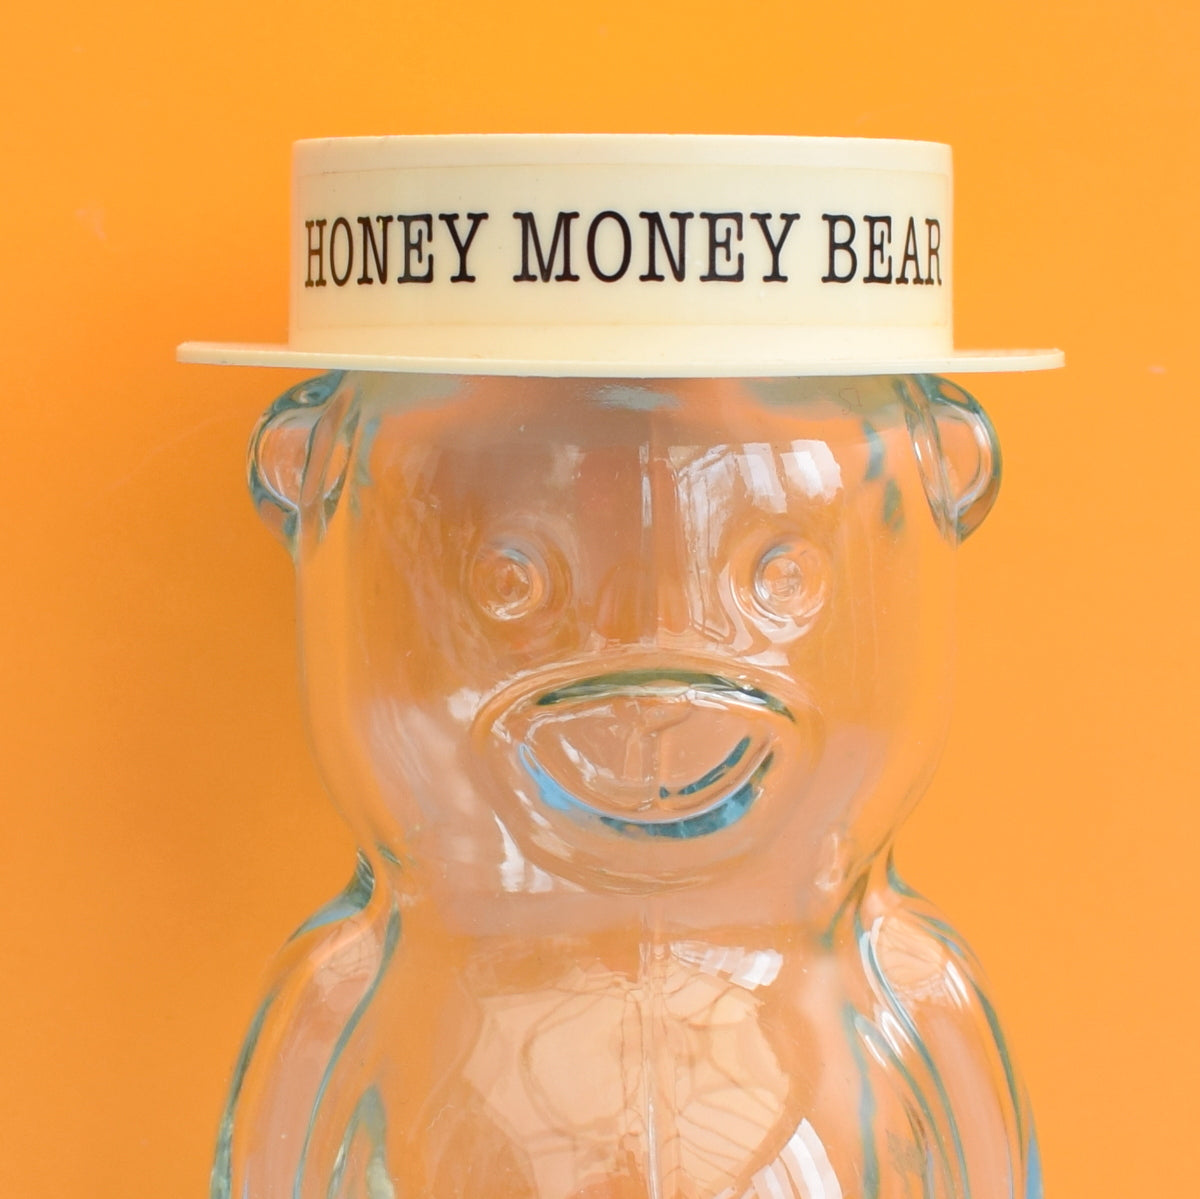 Vintage 1970s Plastic Money Box - Honey Money Bear